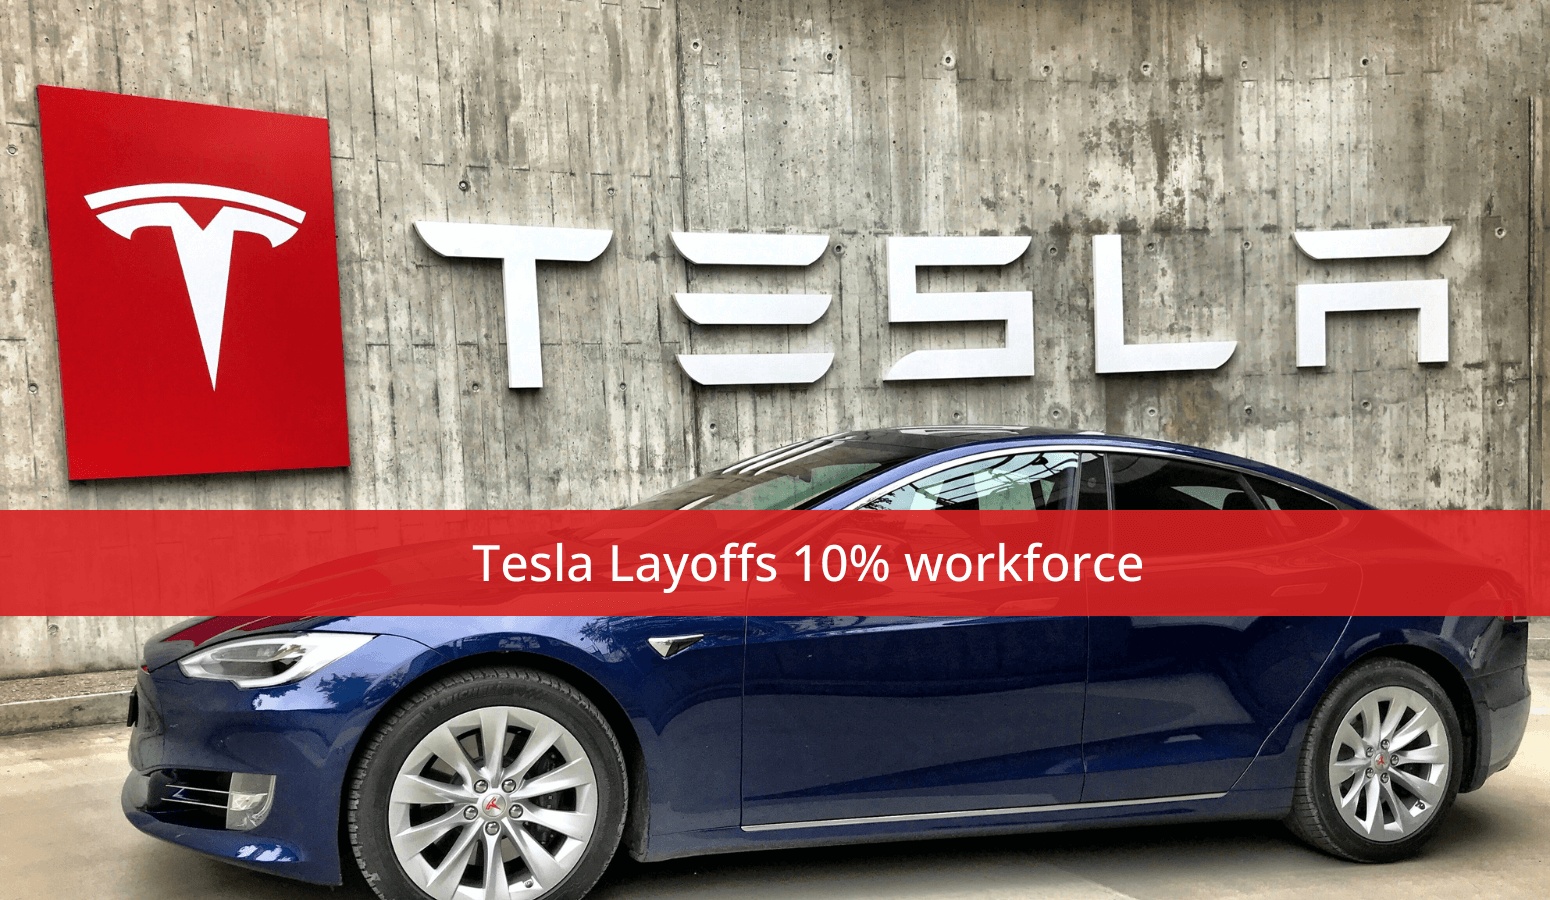 Featured image for “Tesla Layoffs 10% workforce”